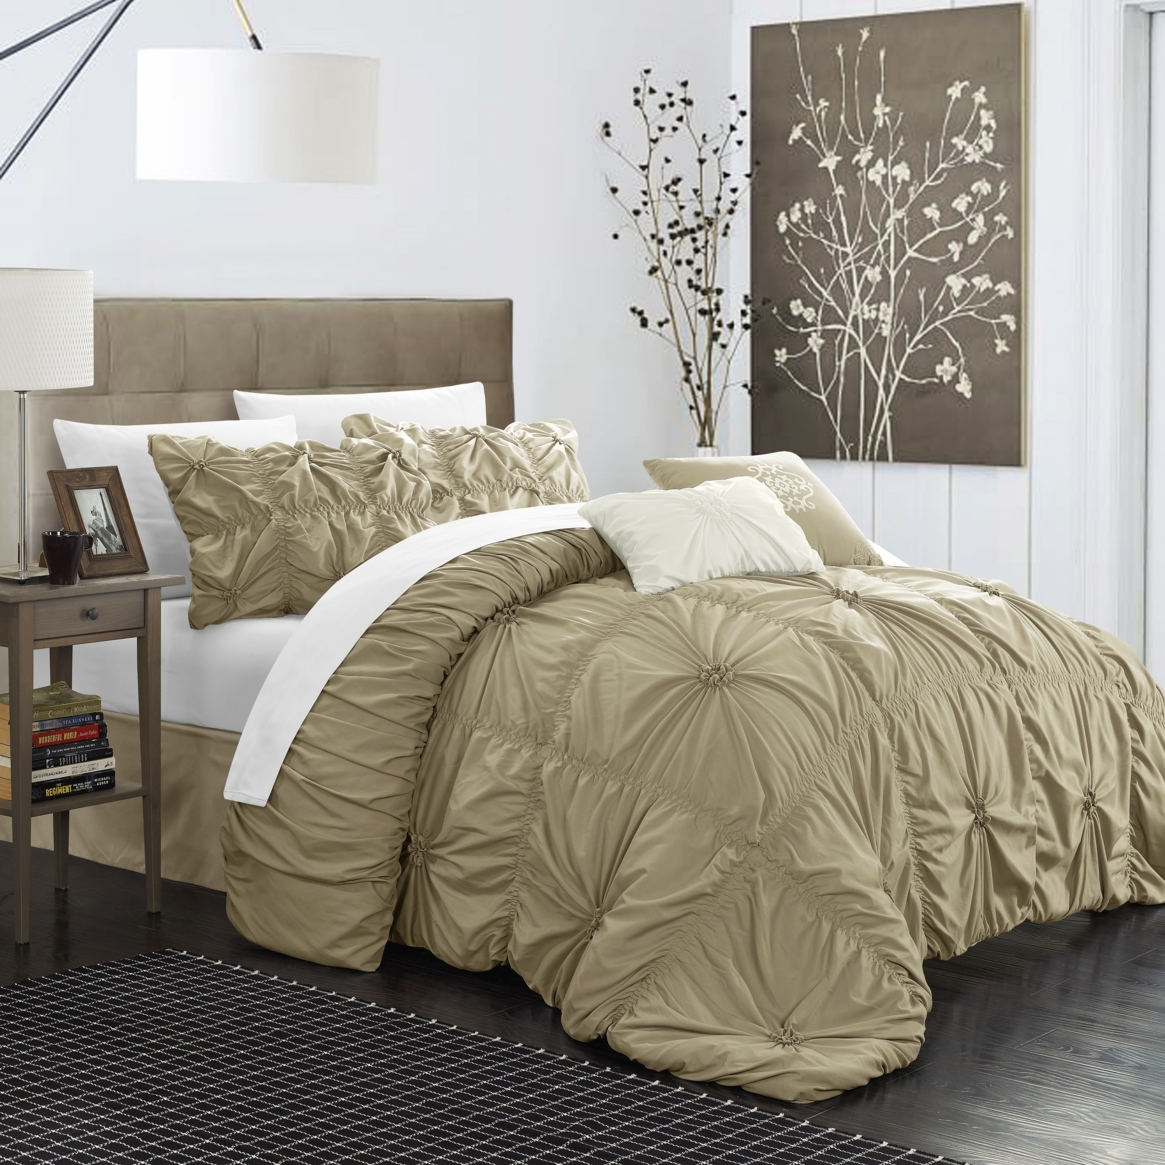 Hilton 10 Piece Comforter Set Floral Pinch Pleated Ruffled Designer Embellished Bed In A Bag Bedding - Taupe, King